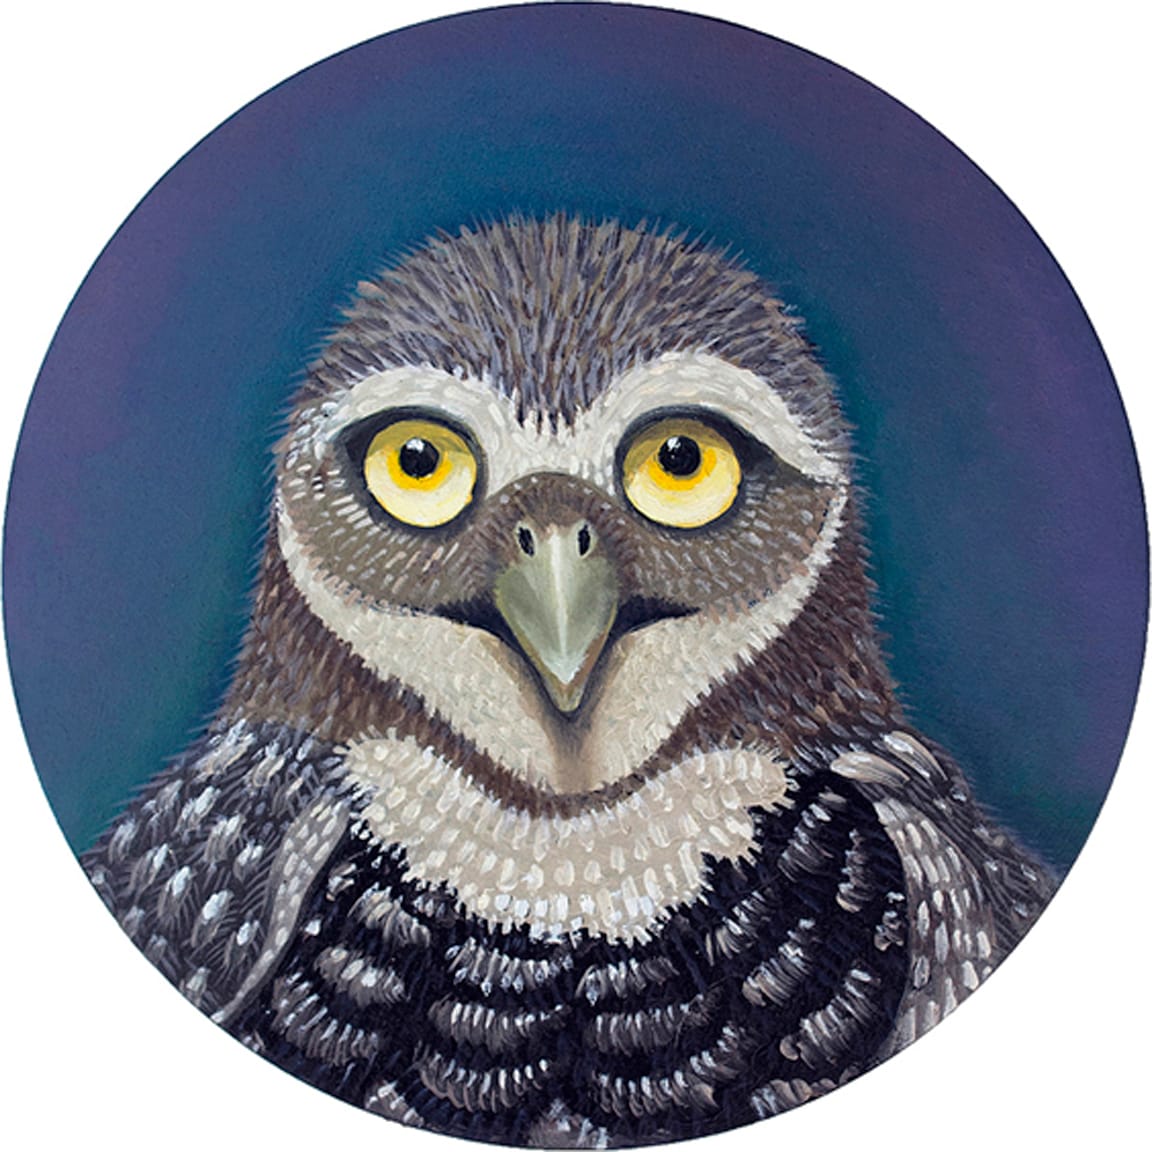 Burrowing Owl by Sarah Stone  Image: Burrowing Owl